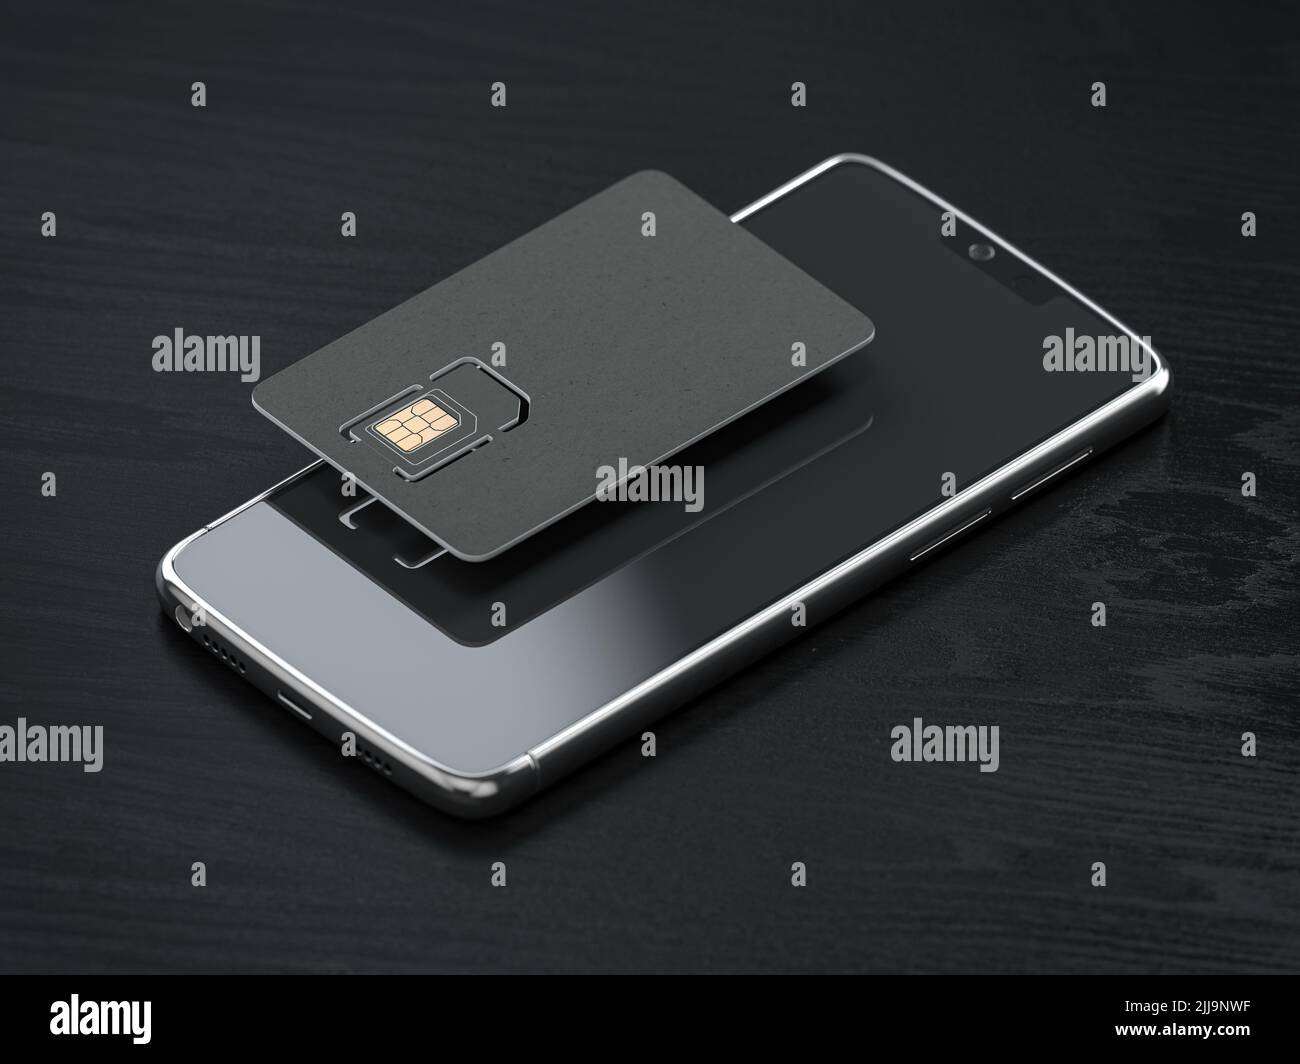 Blank black SIM smart card and mobile phone or smartphone on black table. Mock up. 3d illustration Stock Photo